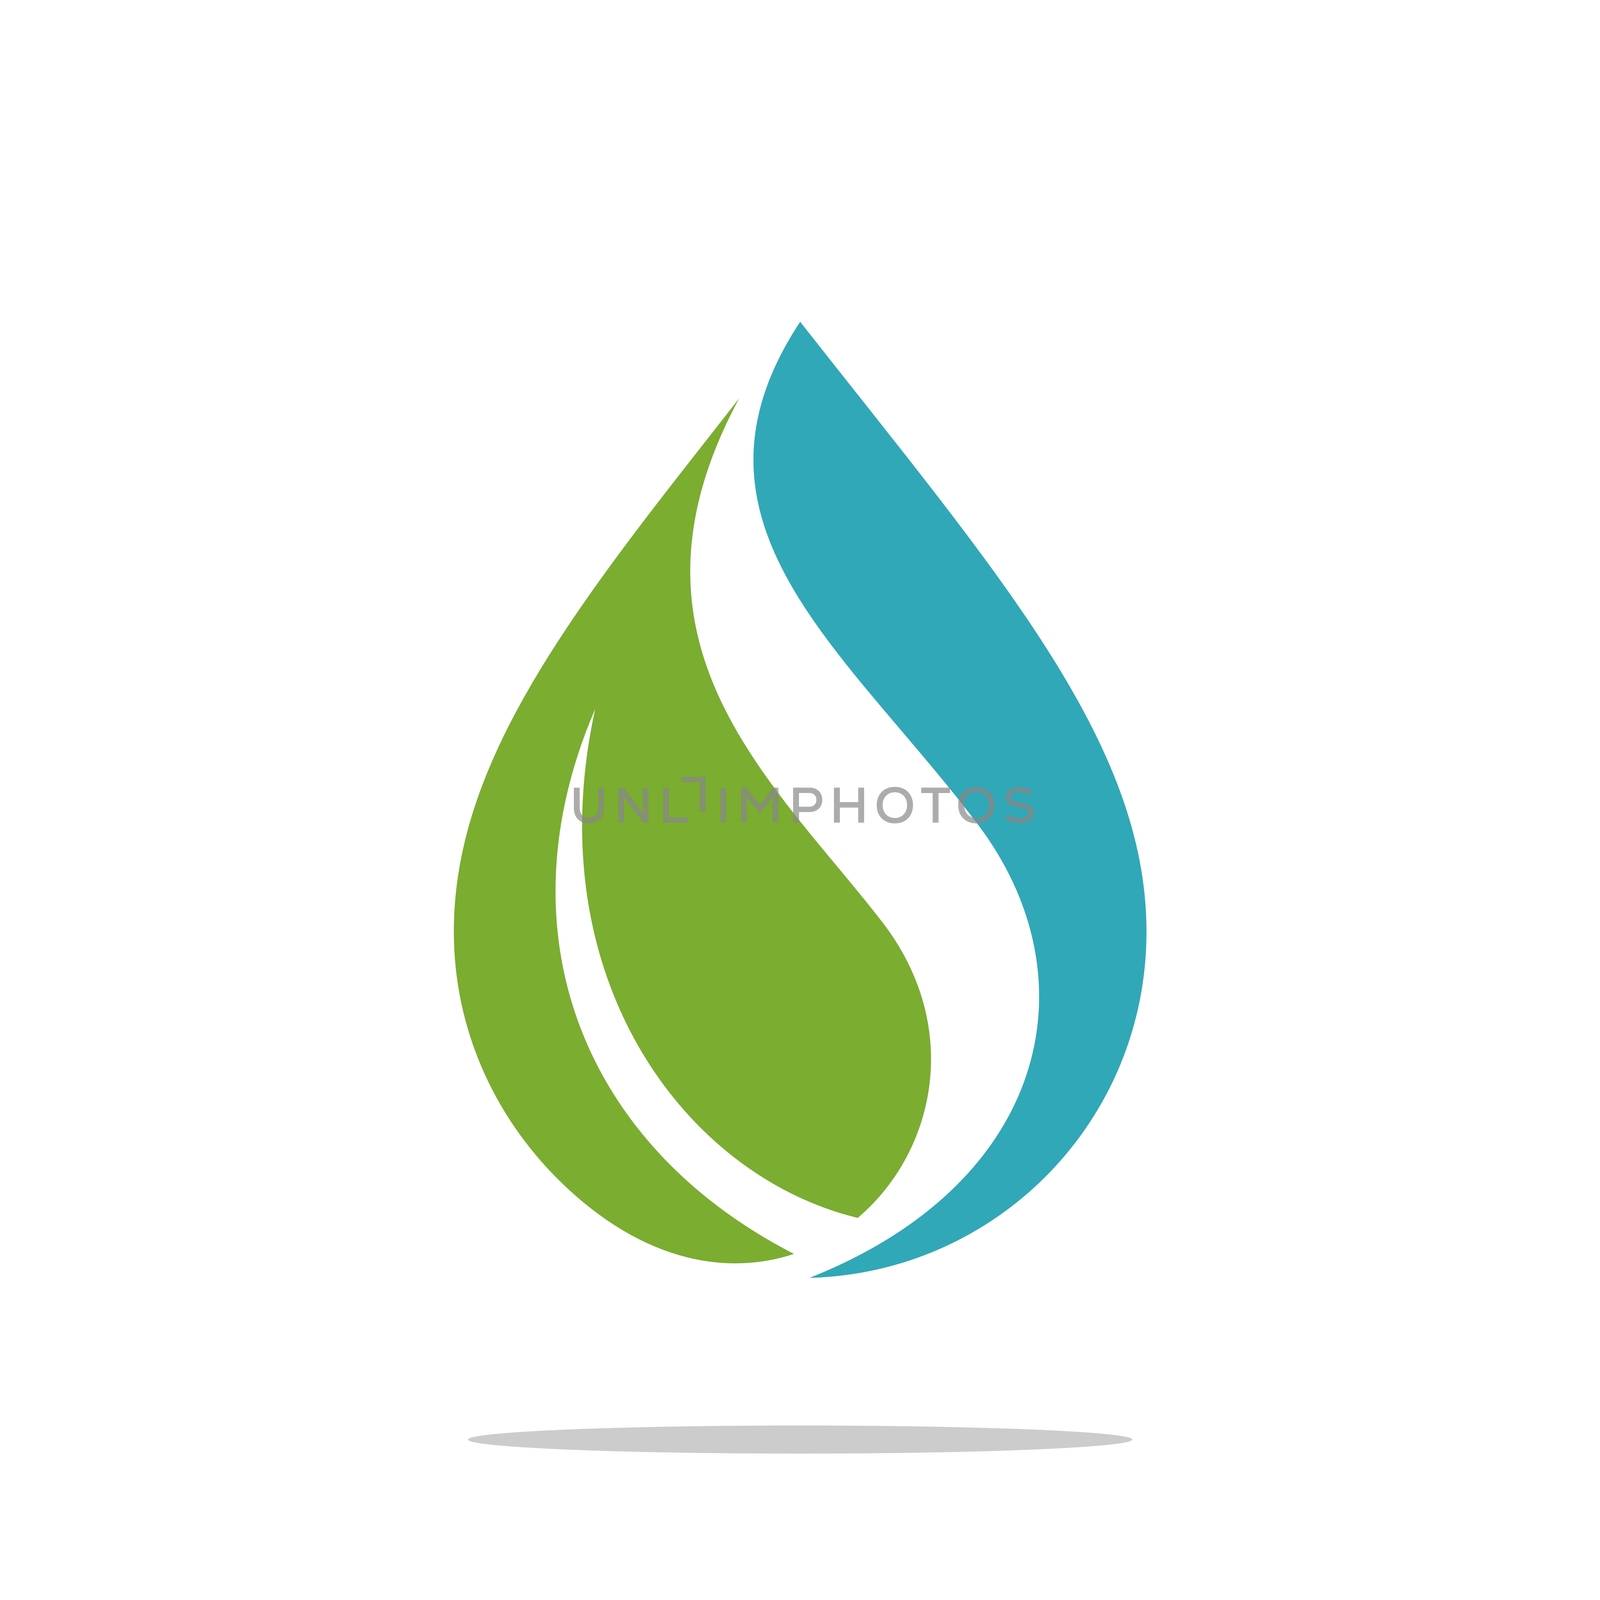 Natural Drop Water Spa Logo Template Illustration Design. Vector EPS 10.